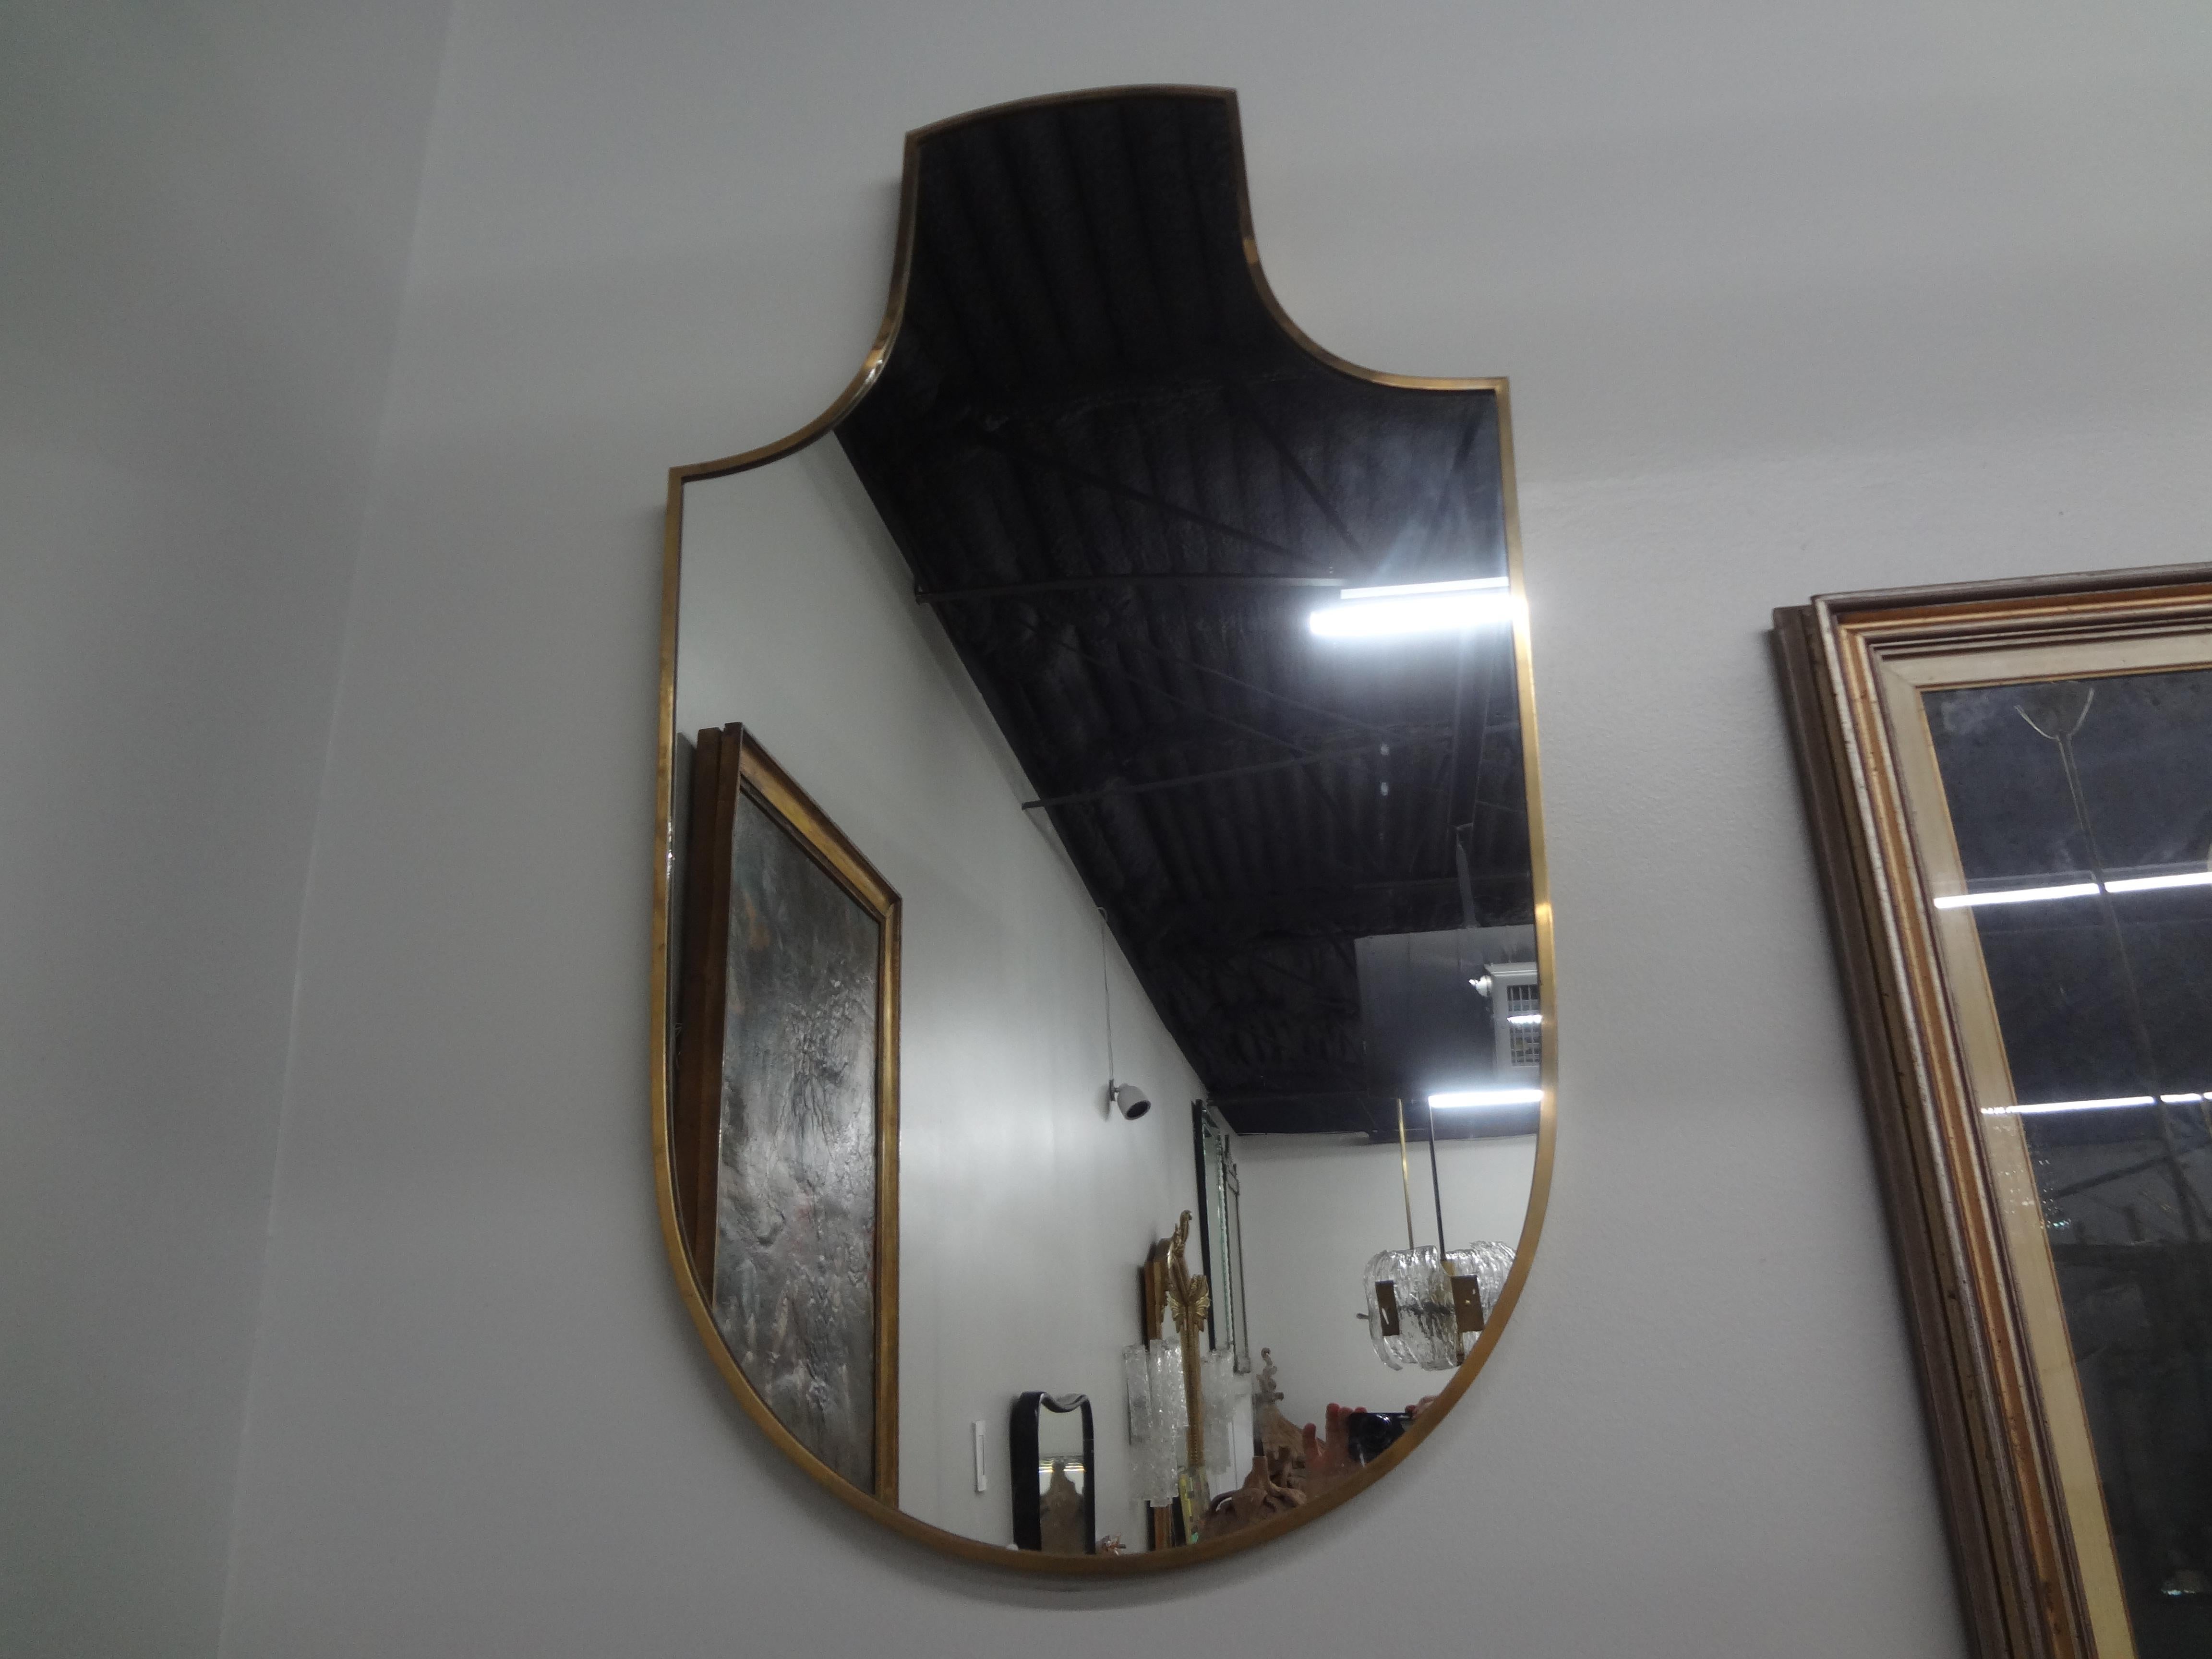 Italian Modern Brass Shield Shaped Mirror.
This versatile Italian mid century modern Gio Ponti inspired brass shield shaped mirror will work in a variety of interiors.
Perfect for a powder room, dressing room or closet.